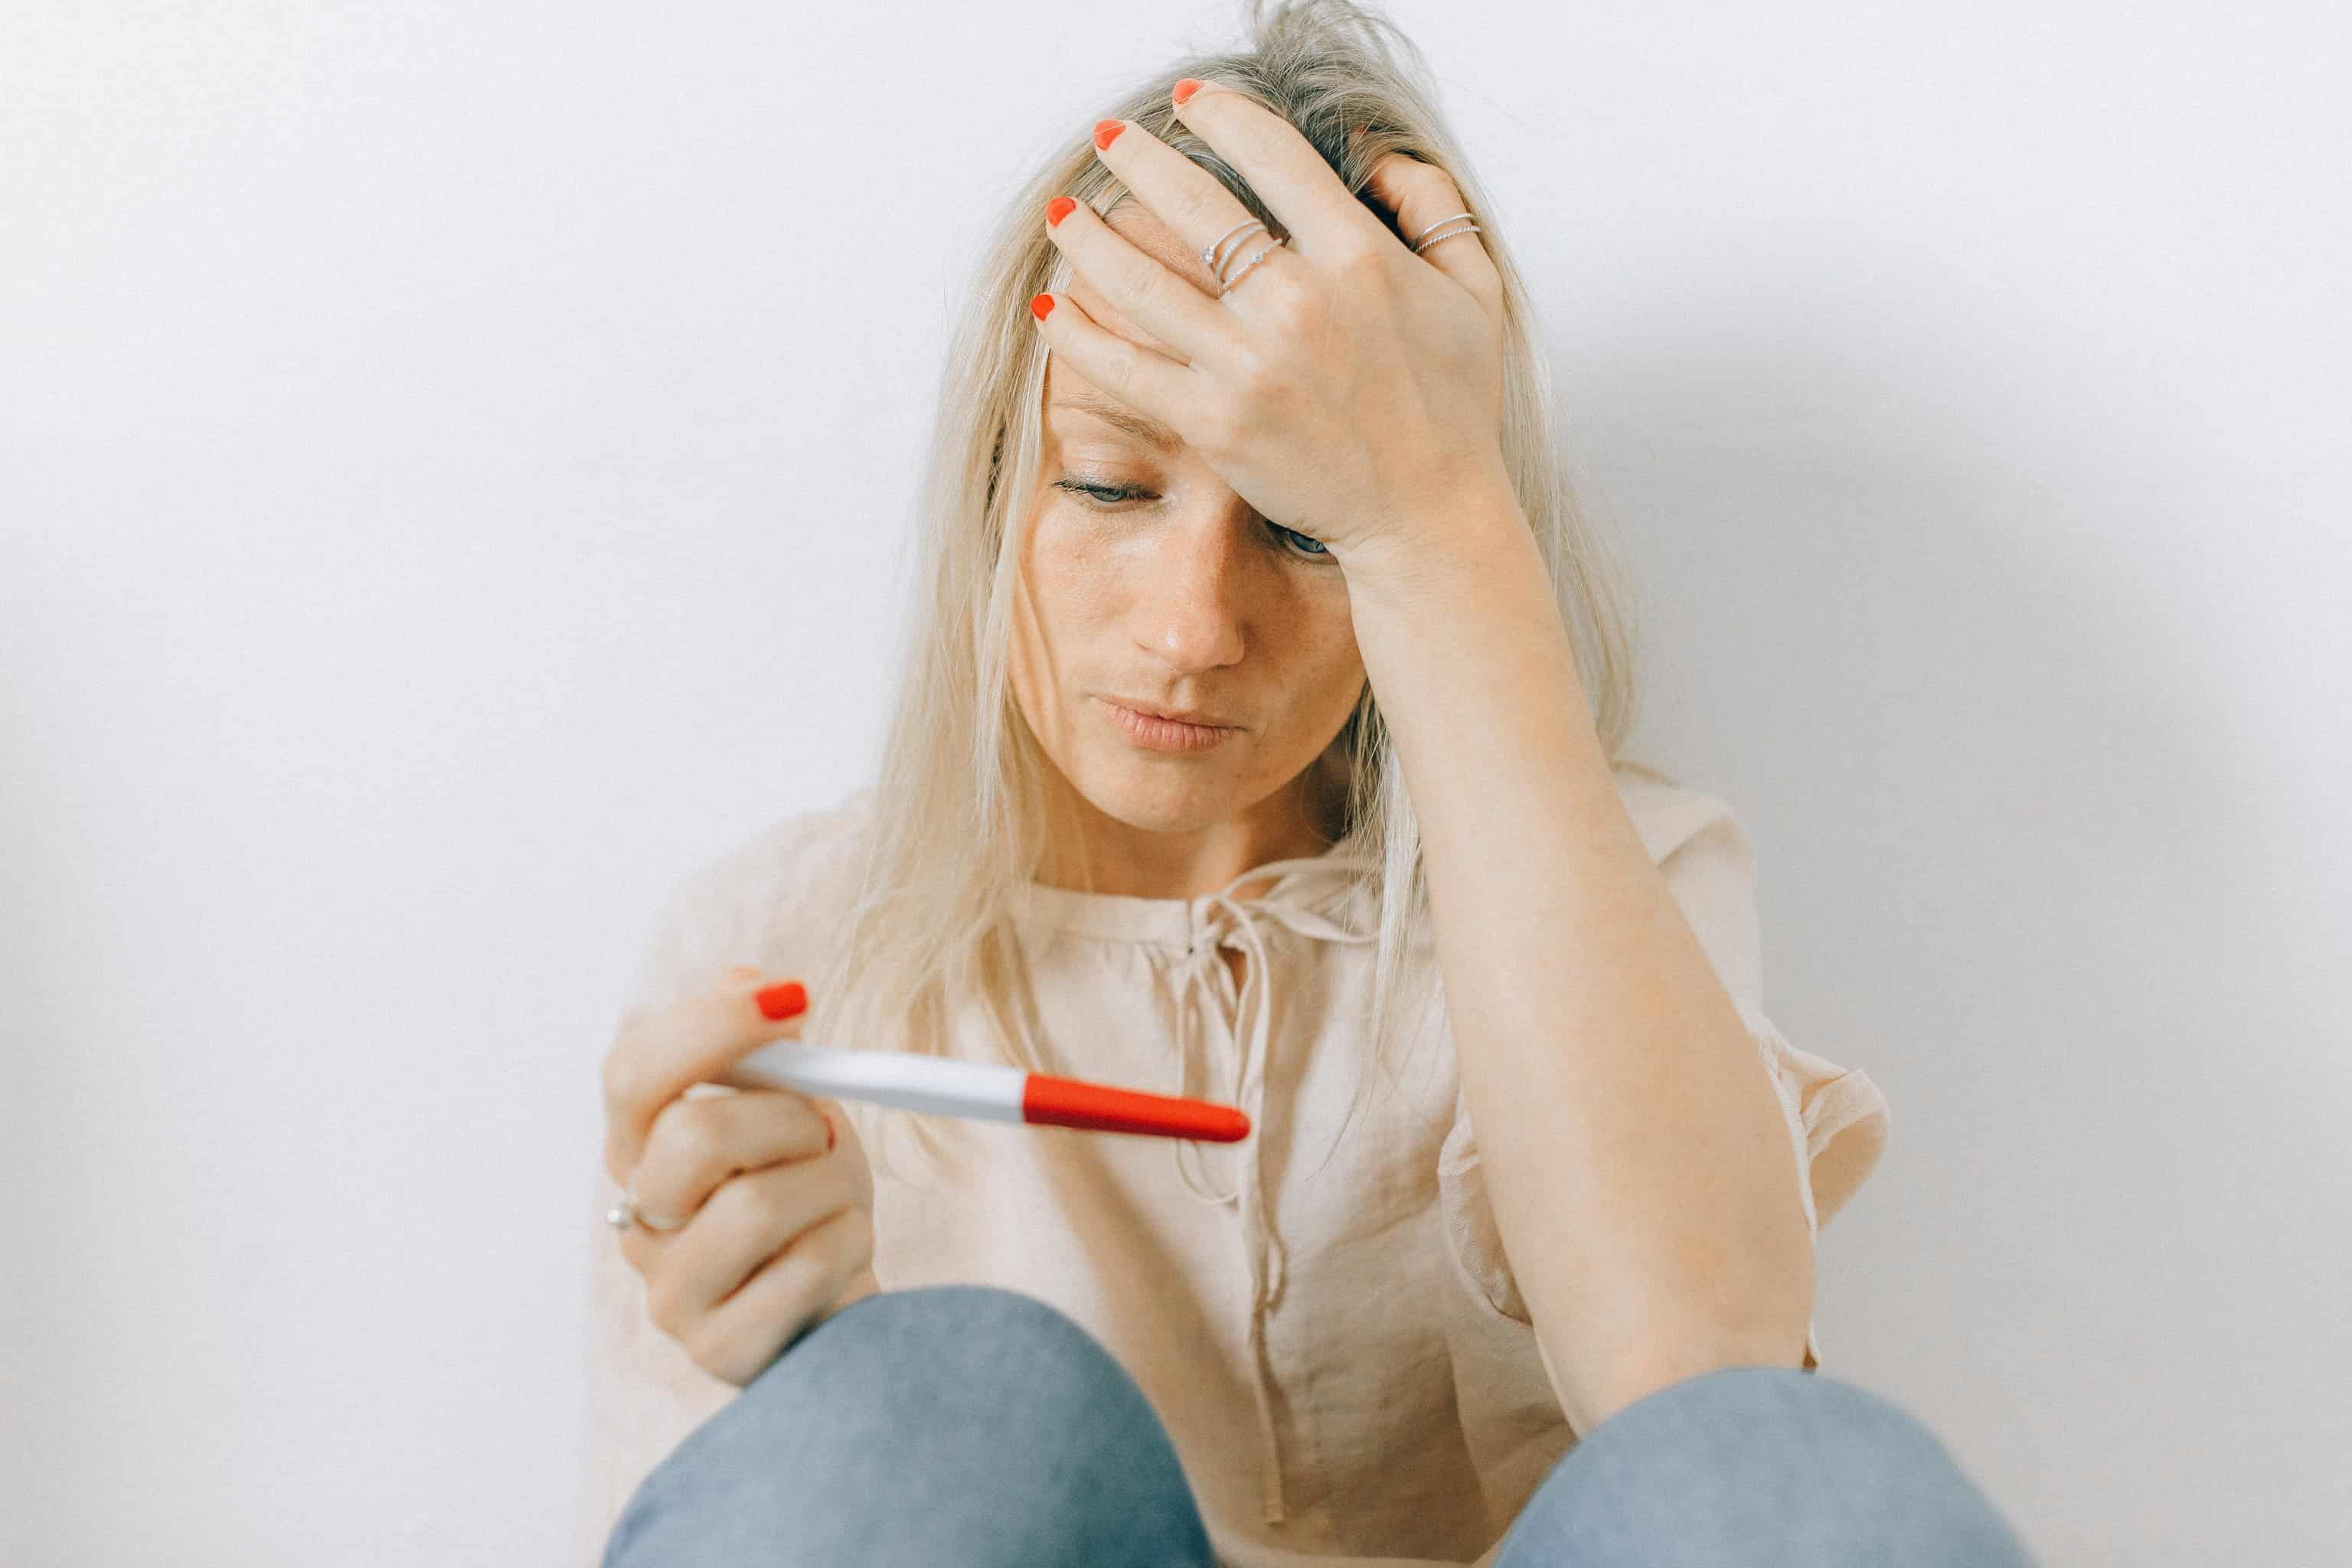 Tipos de madres reaccionando a un test de embarazo positivo